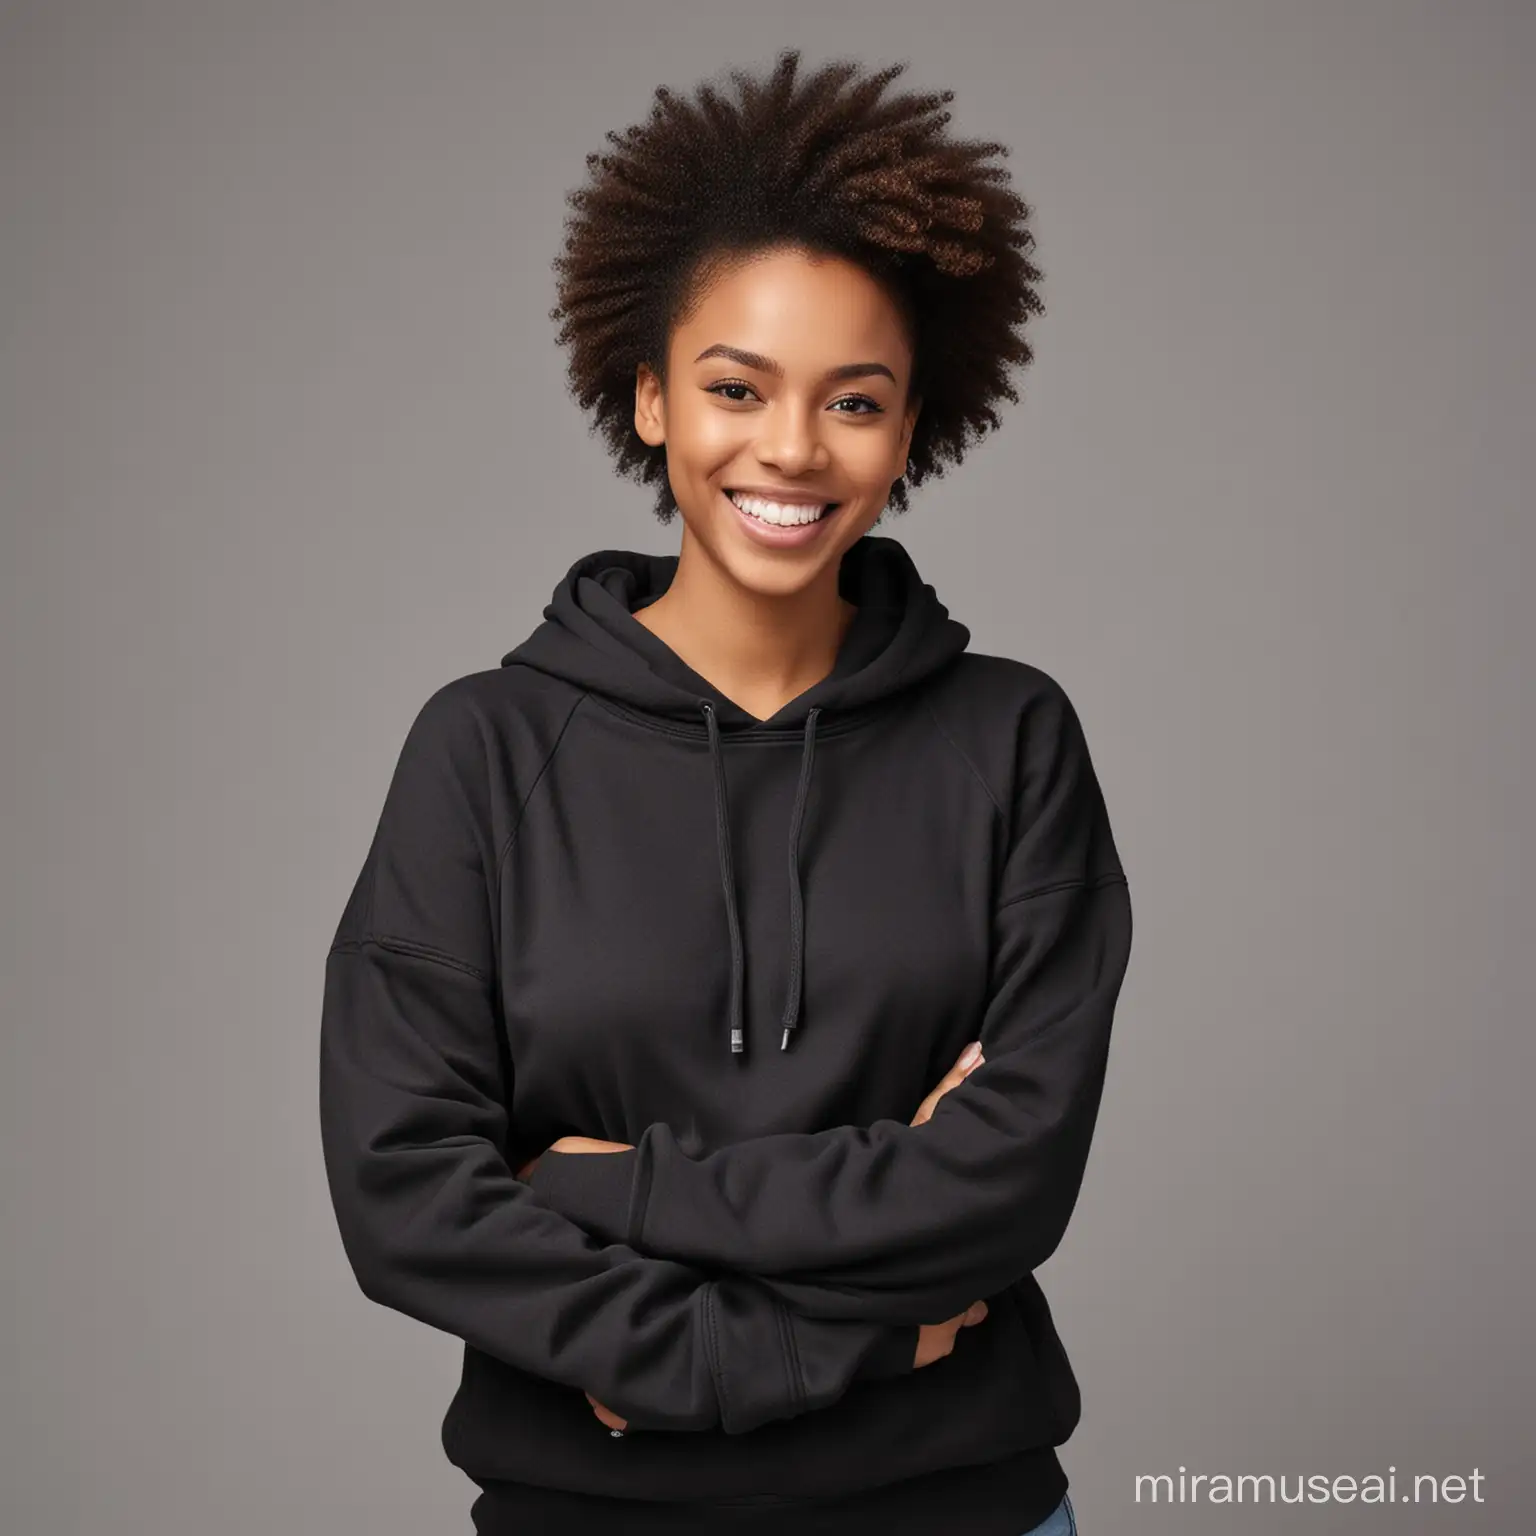 Smiling Black Woman Putting on Black Sweatshirt Against Gray Background